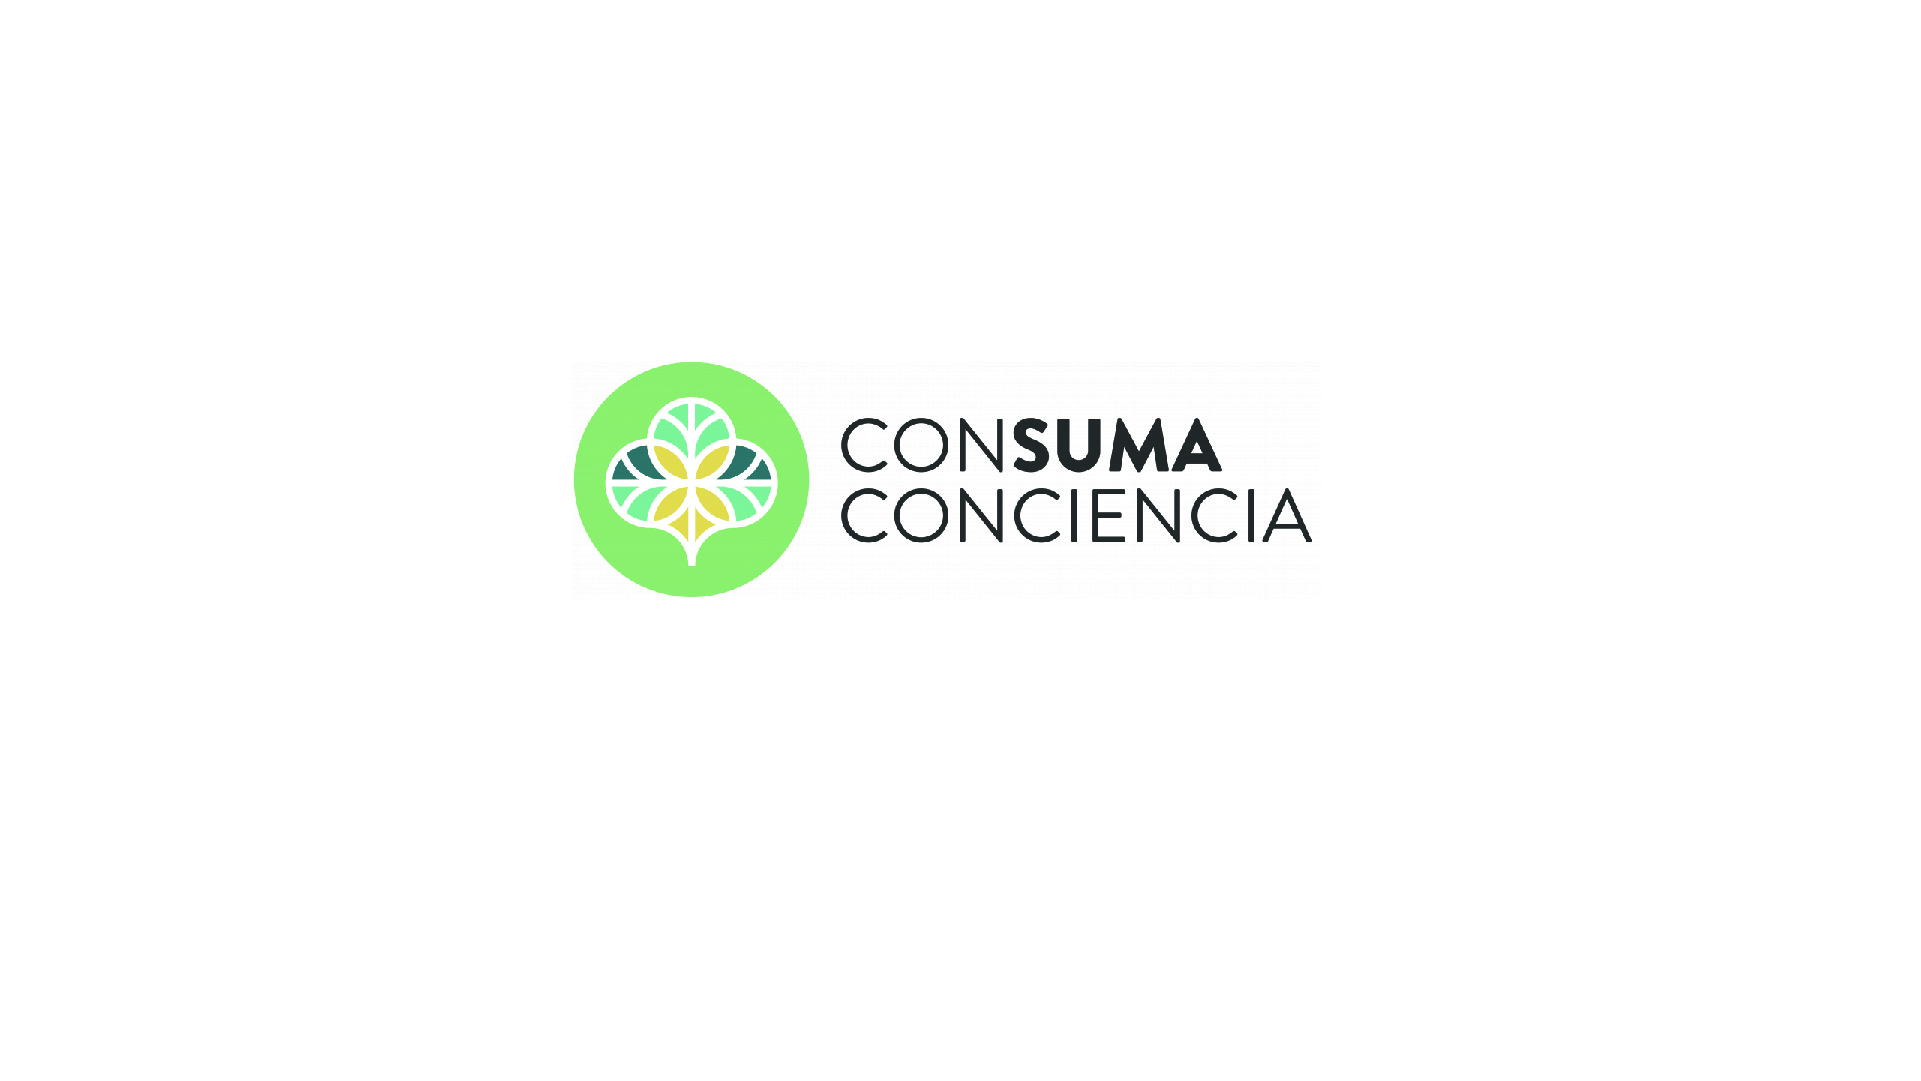 consuma-conciencia-logo